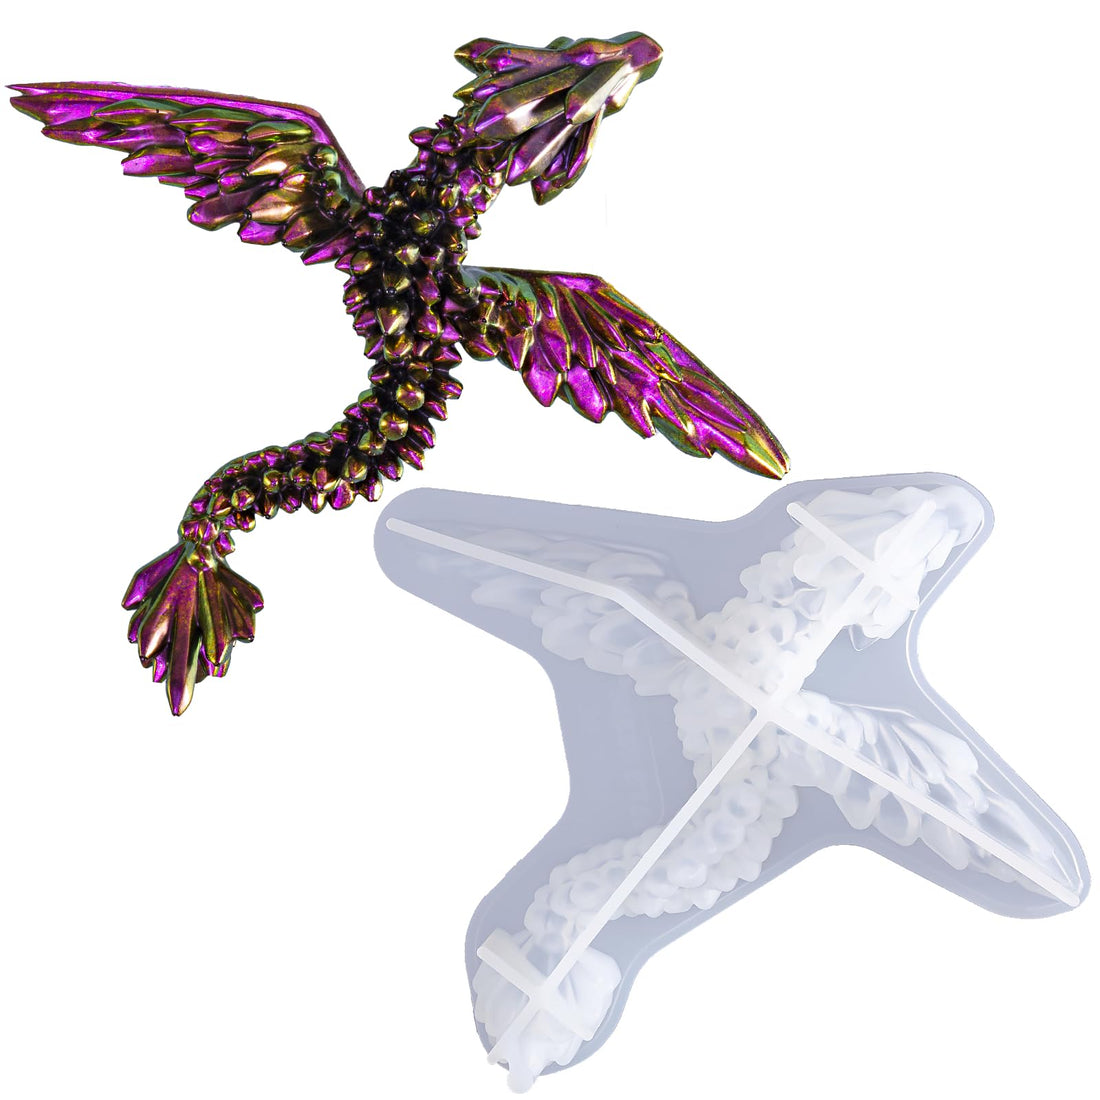 A 3D crystal dragon molds and a gemstone dragon